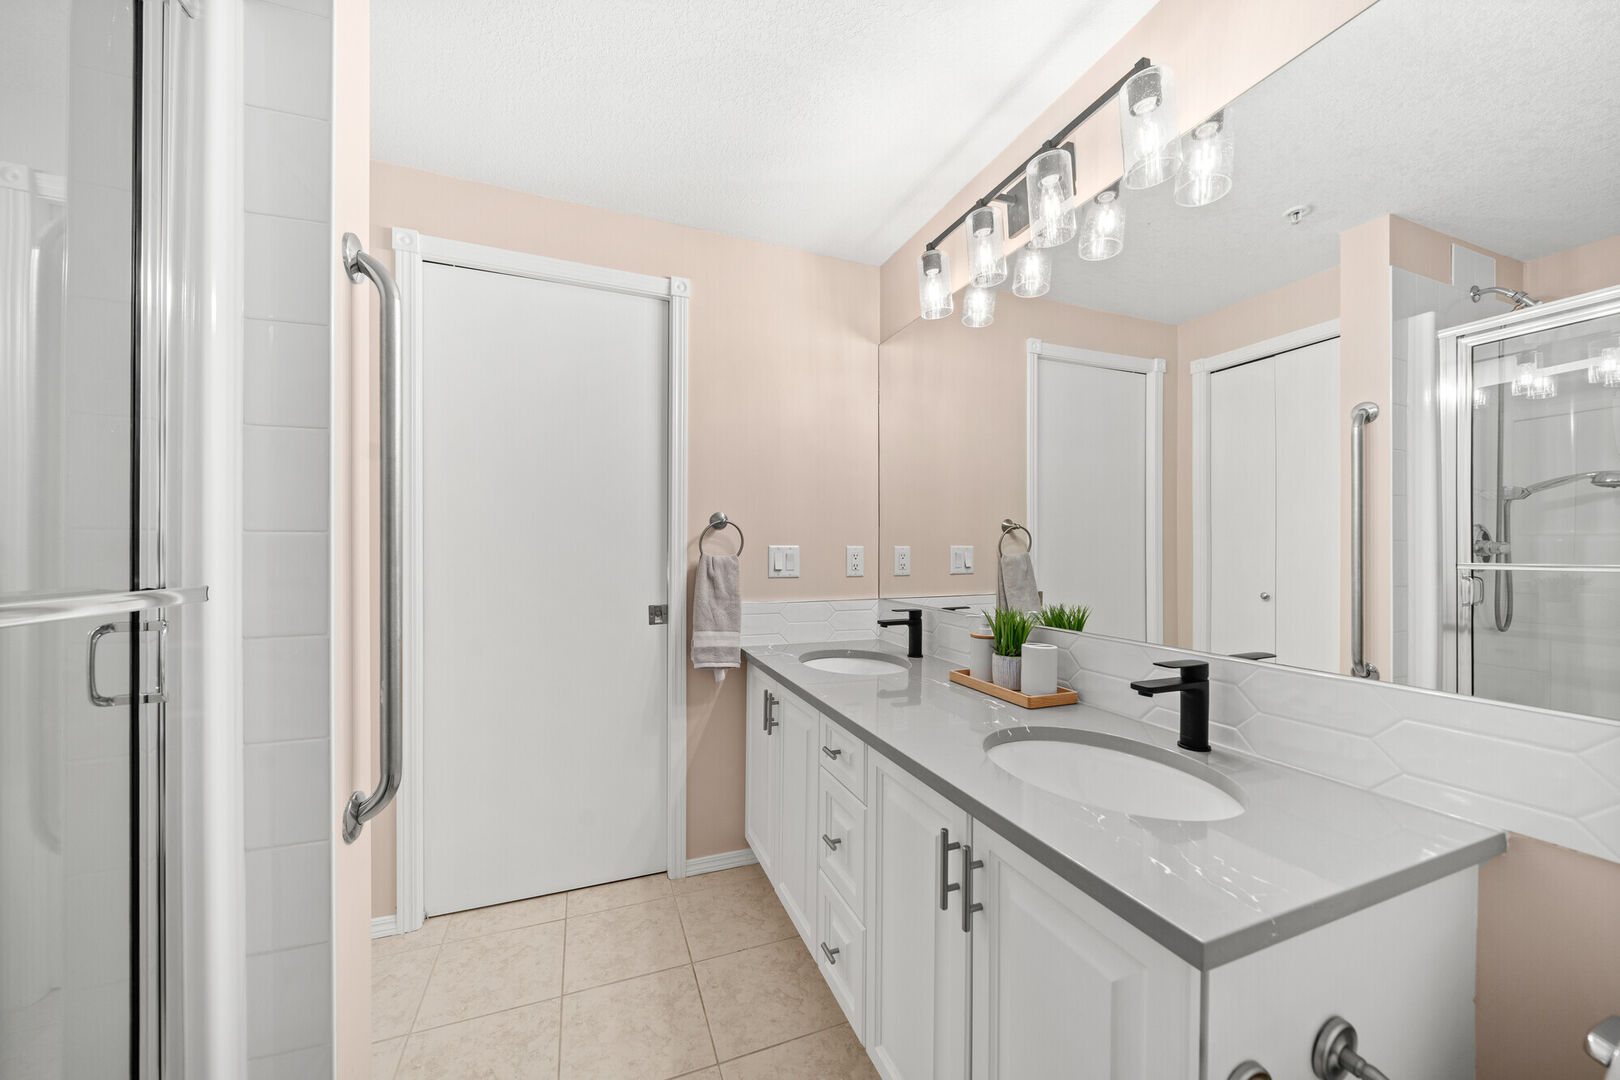 Country Village condo modern light bright white bathroom Calgary interior designer